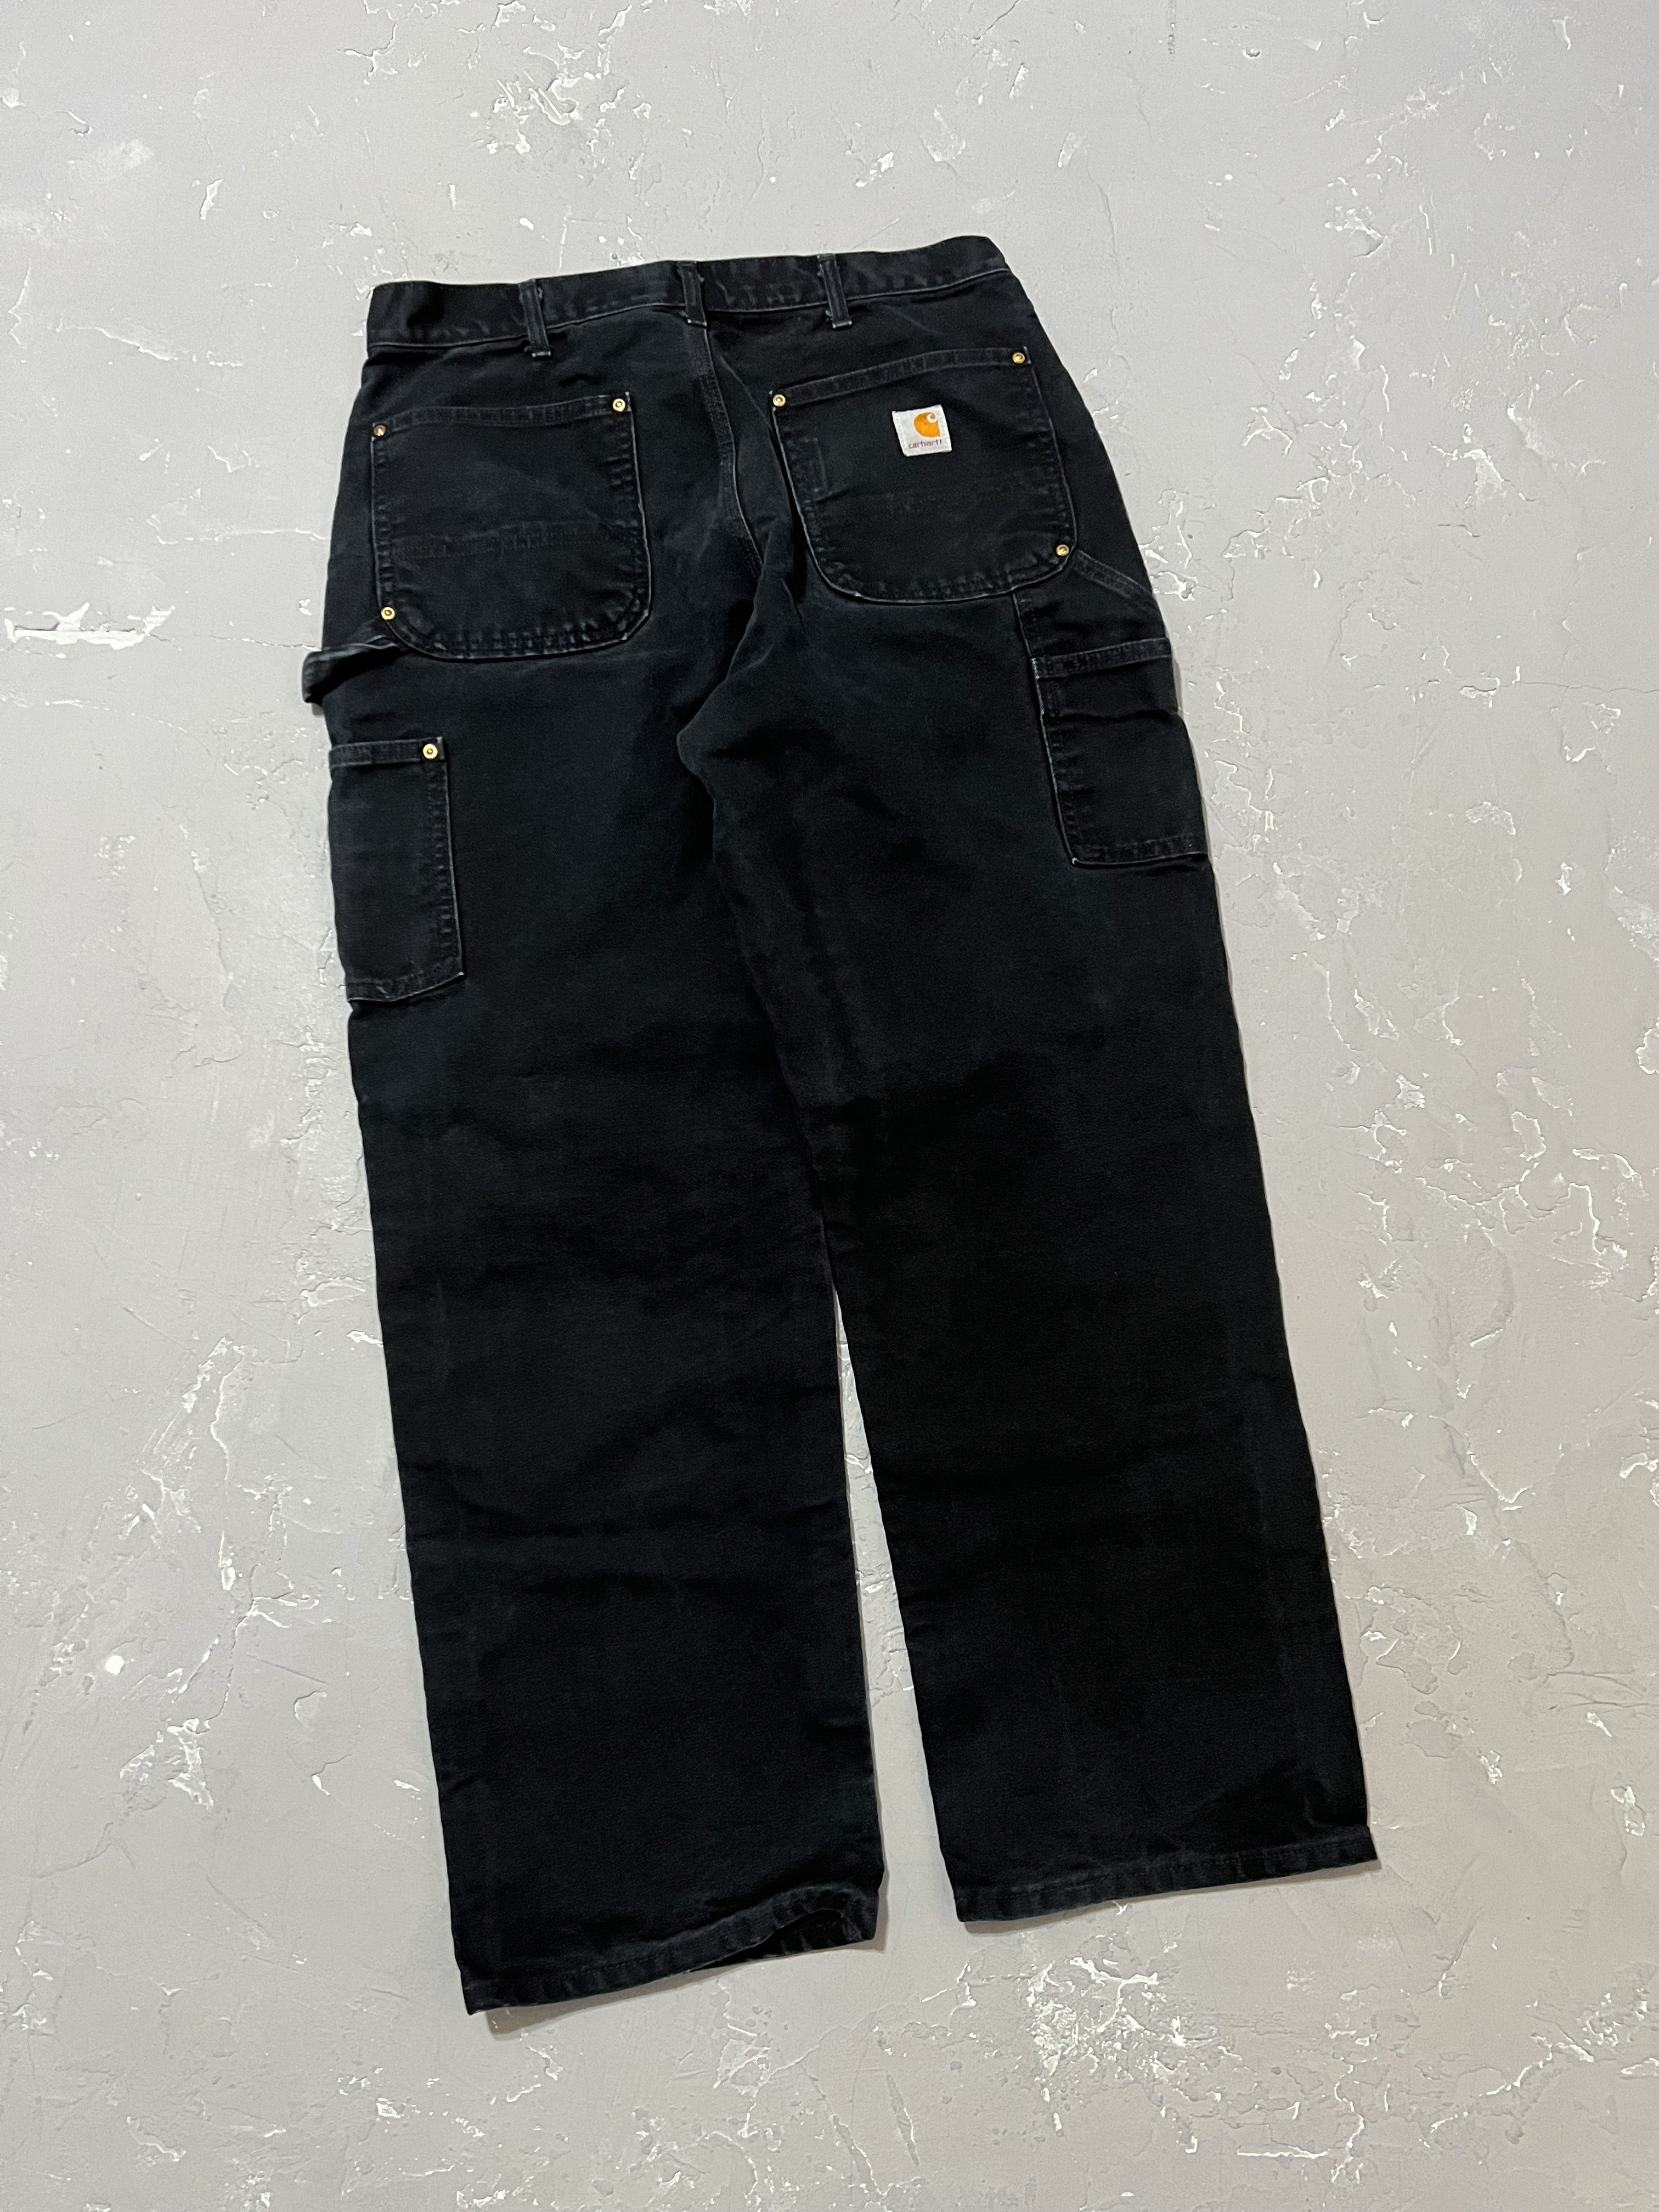 Carhartt Black Double Knee Pants [33 x 30]